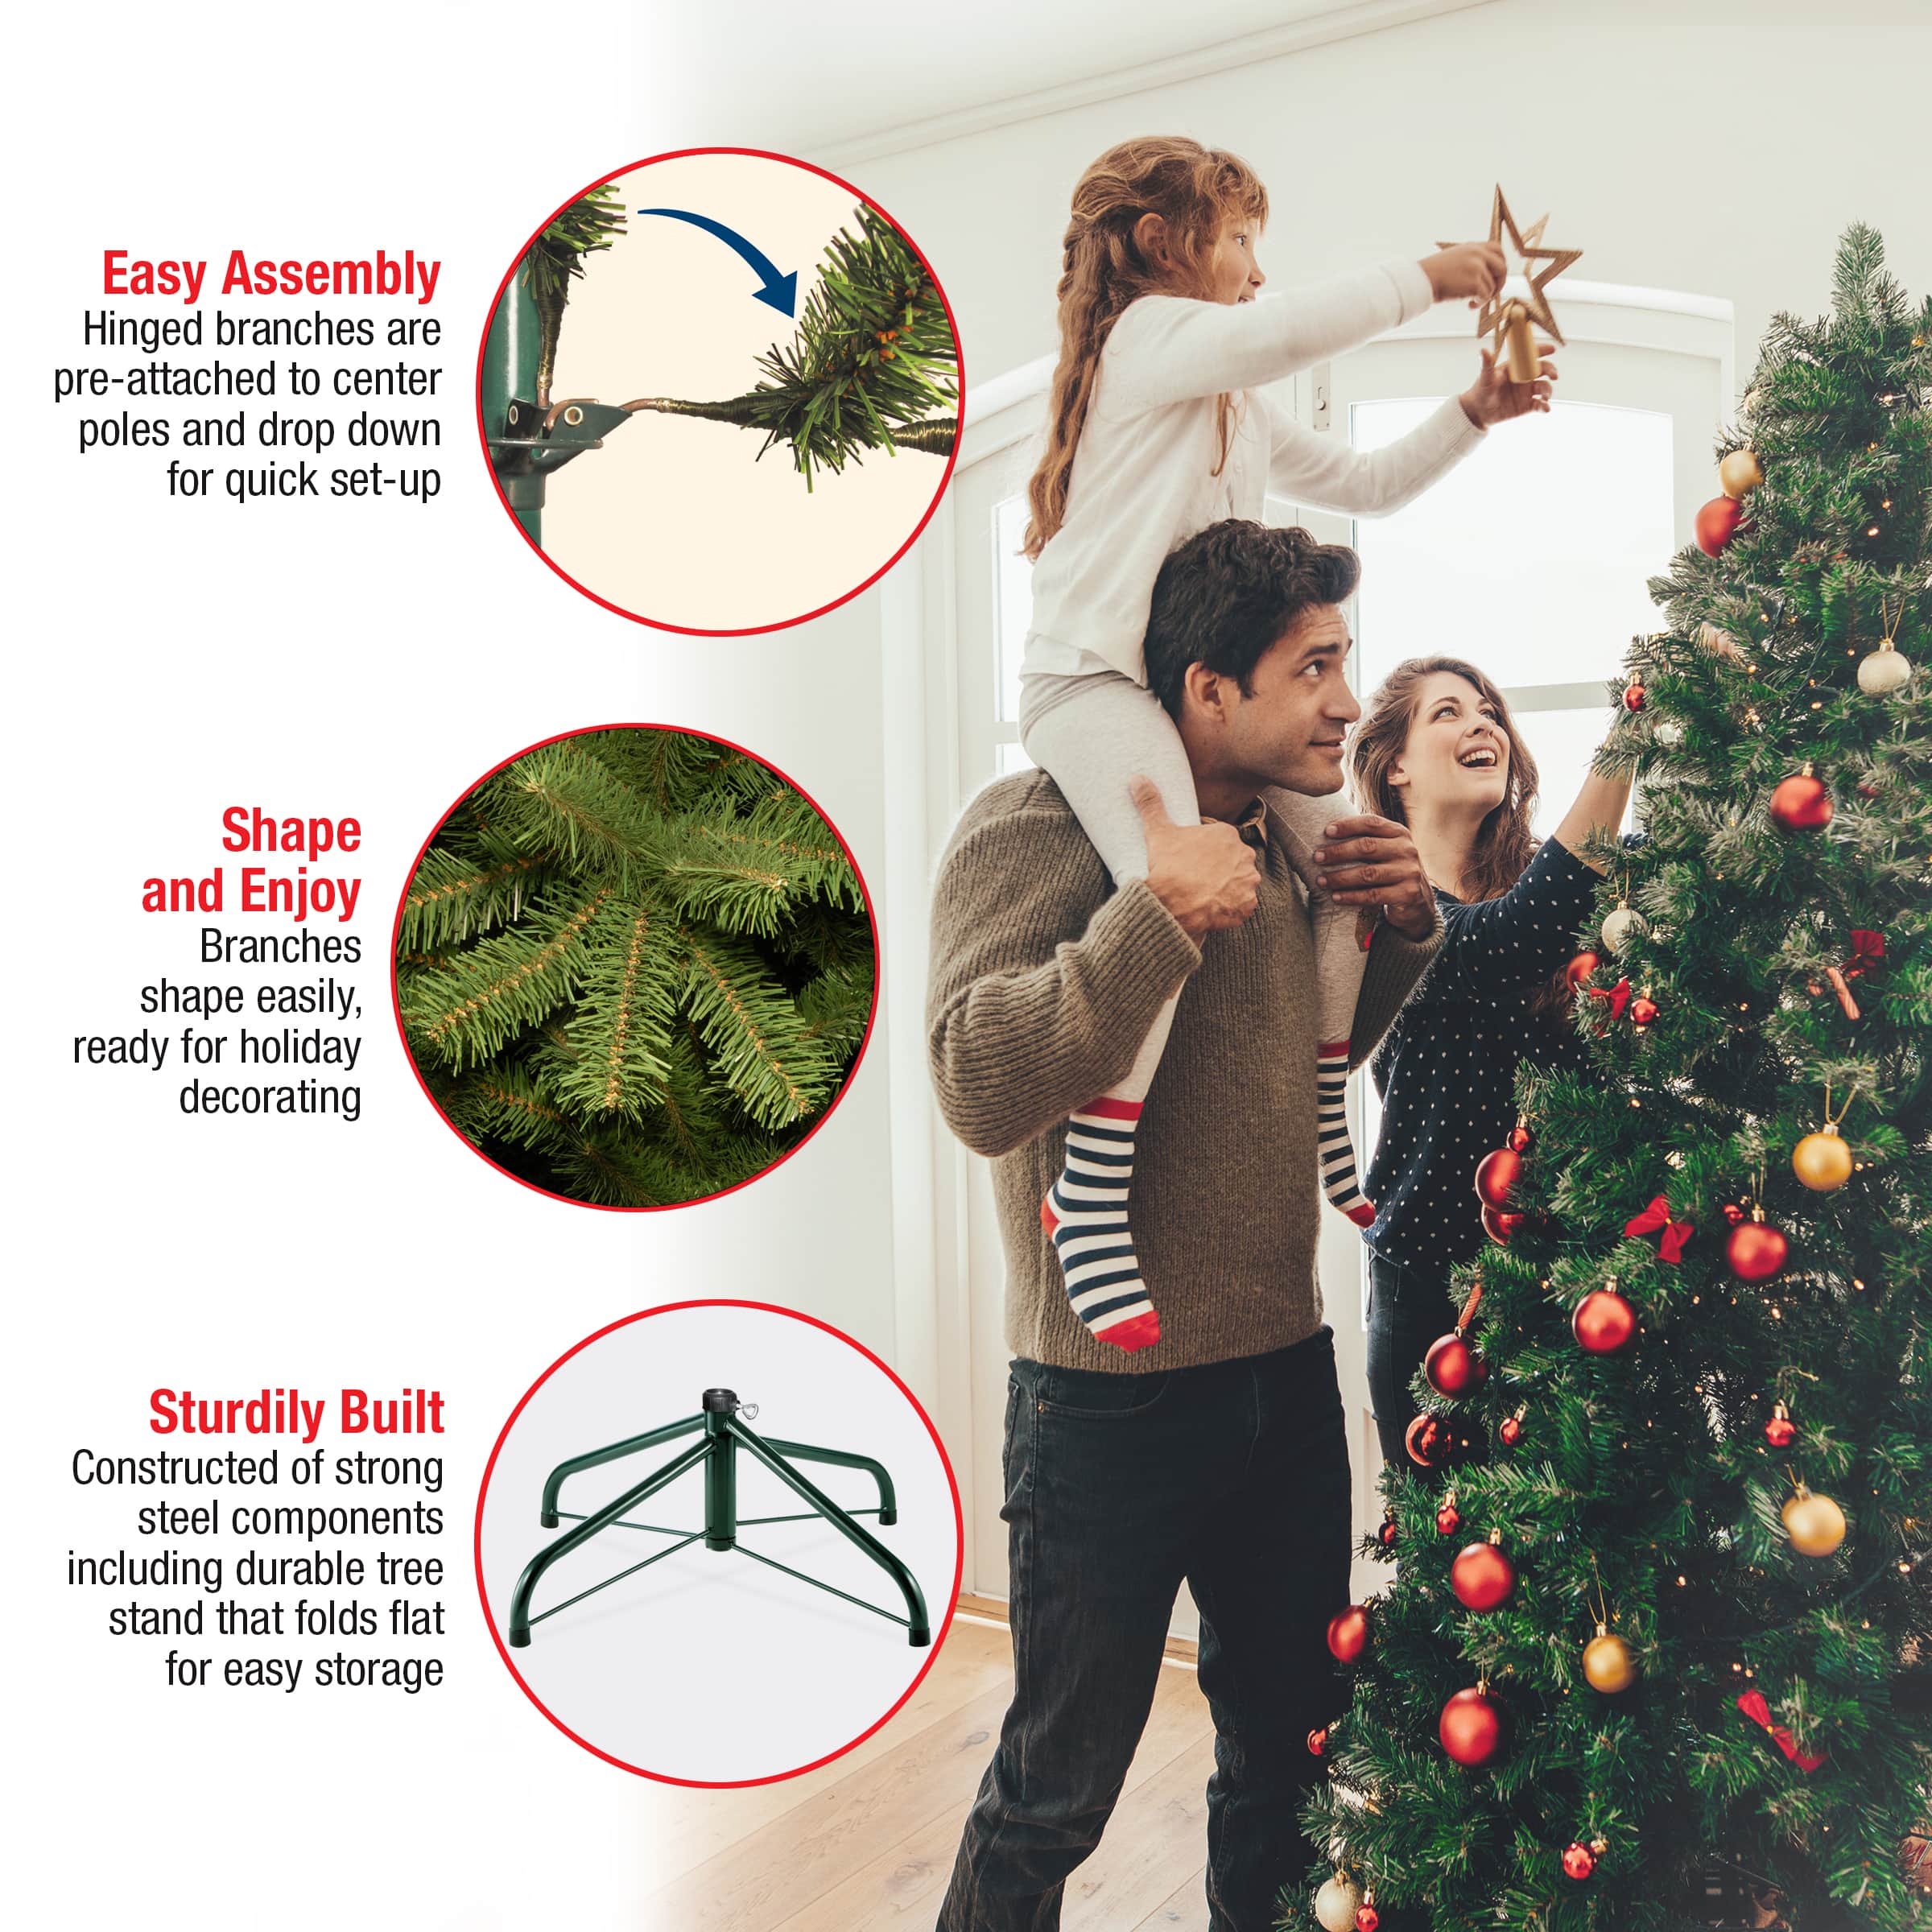 6 ft. Dunhill&#xAE; Fir Full Artificial Christmas Tree